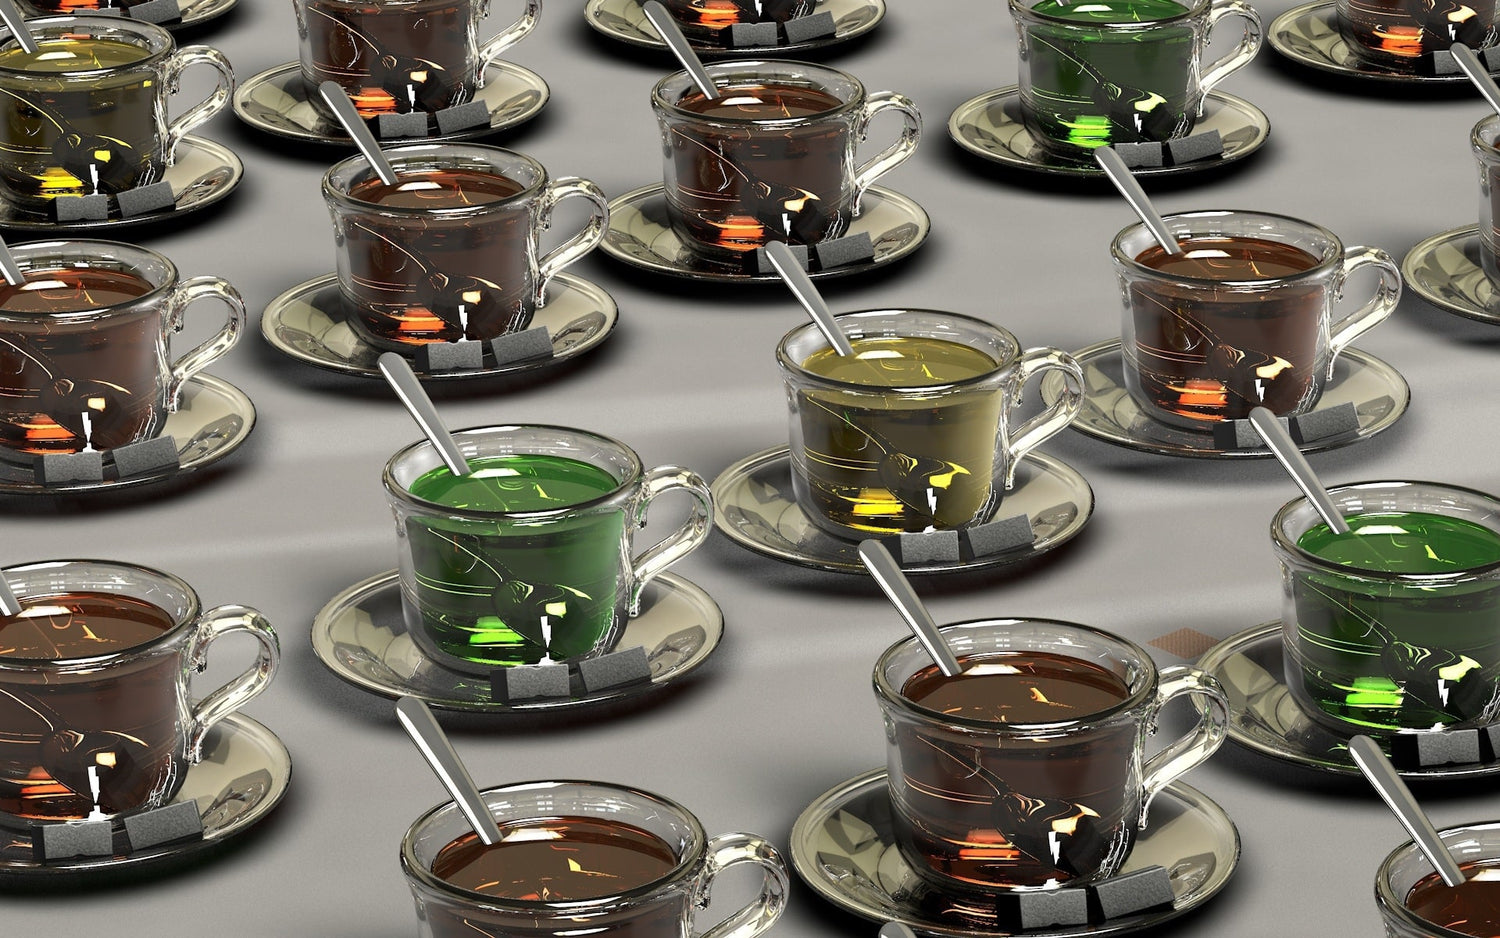 Glass mugs of tea